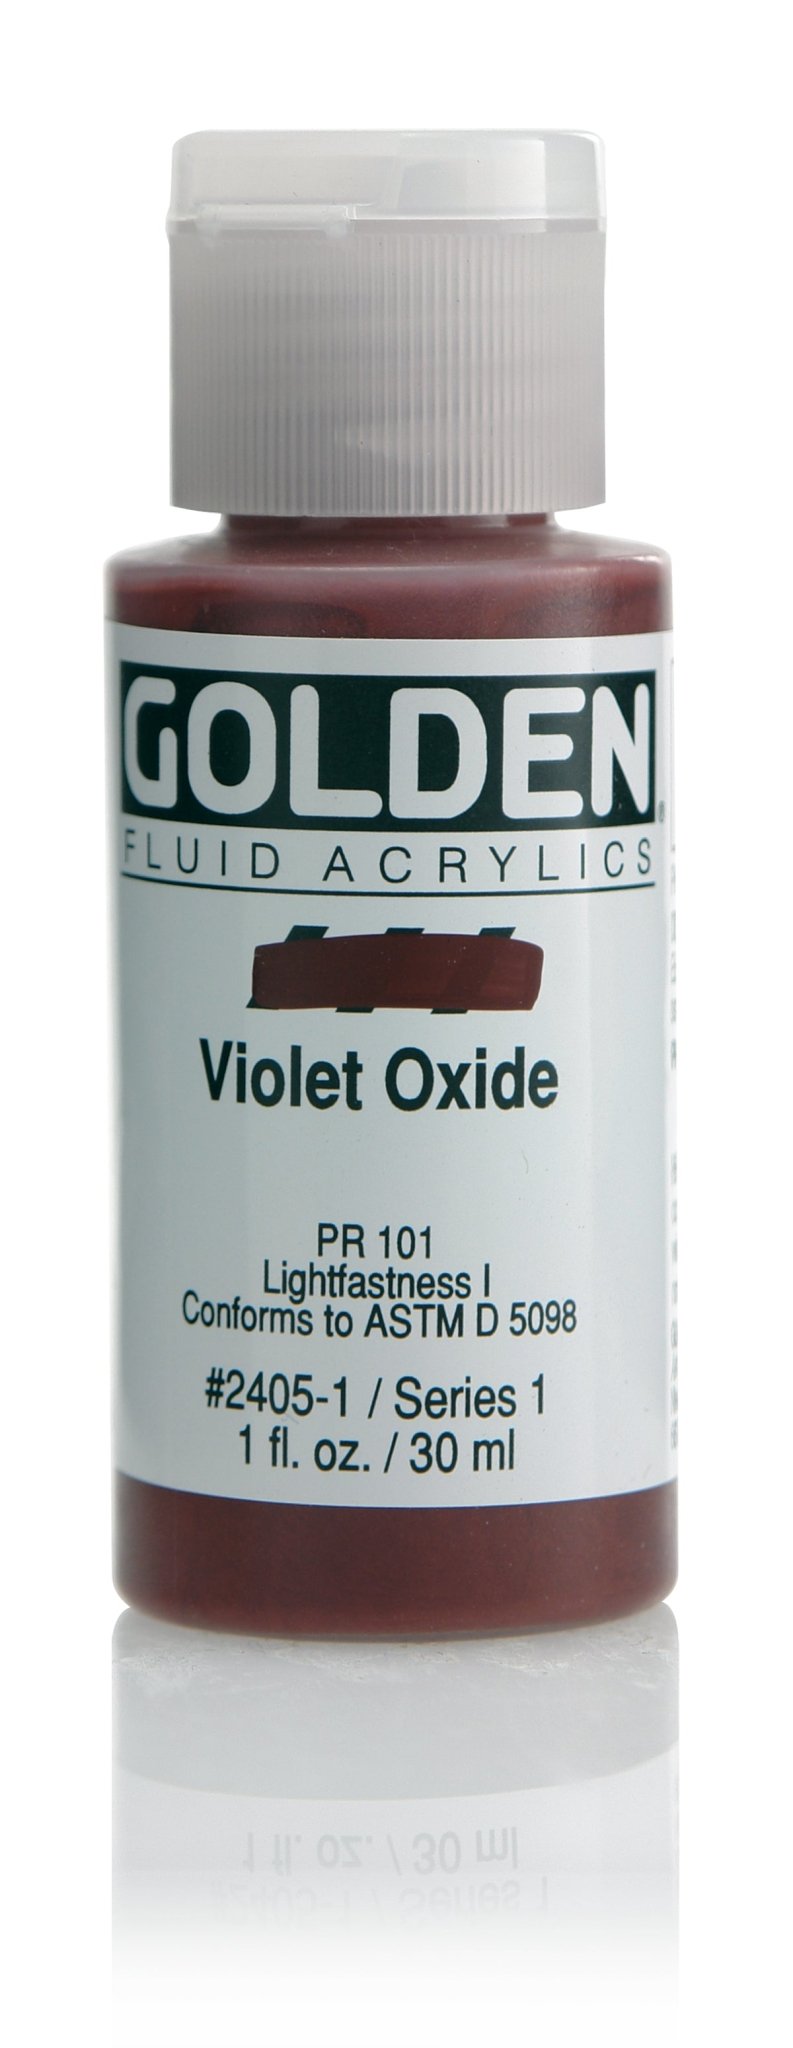 Golden Fluid Acrylics - Violet Oxide - 30ml - Create A Little Magic (Pty) Ltd